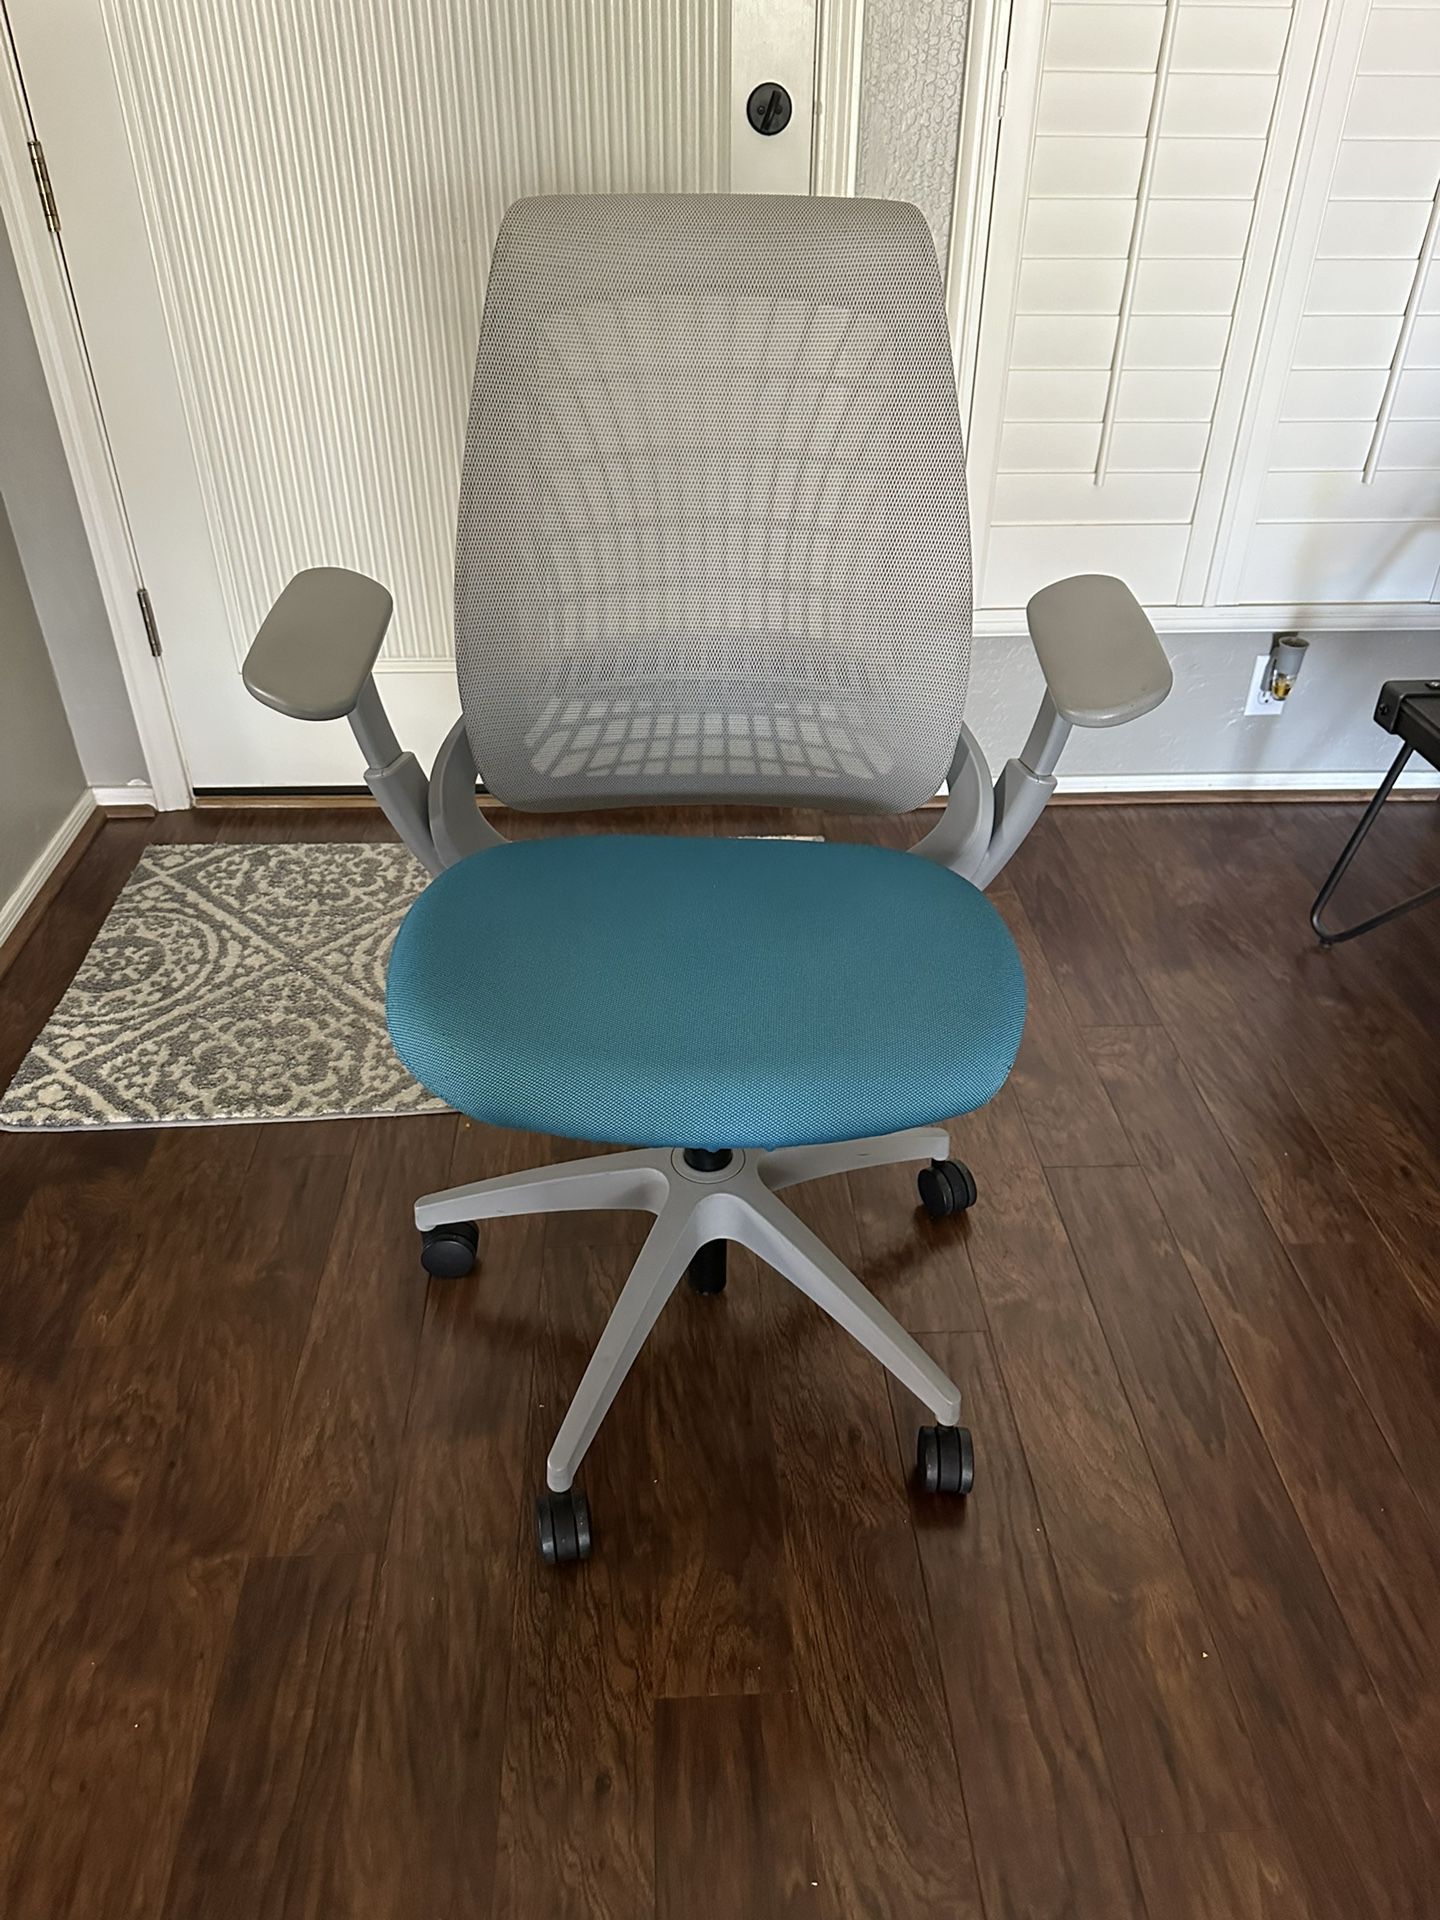 Allsteel Mimeo Desk Chair